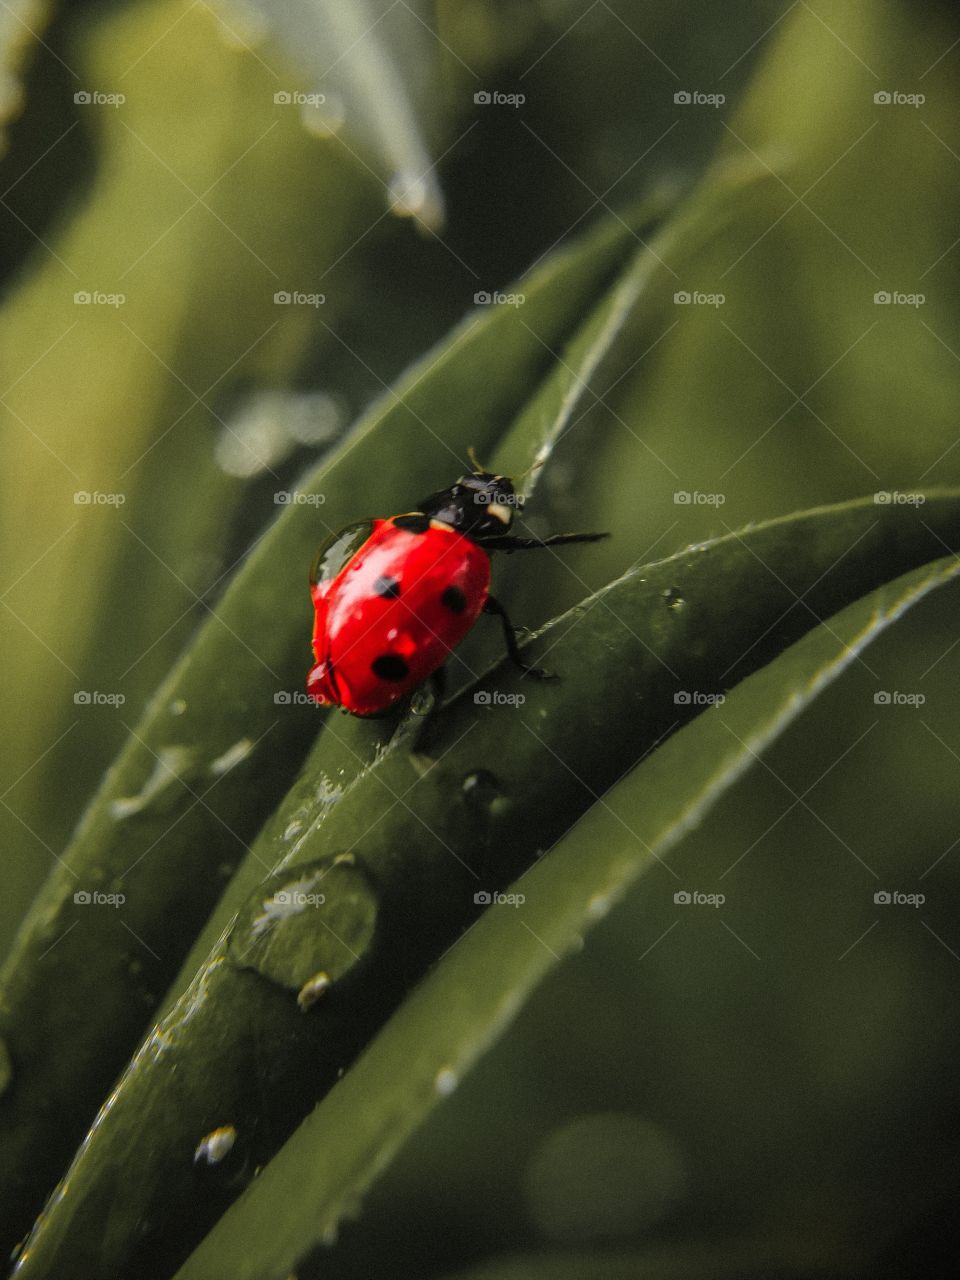 ladybug sitting on the grass